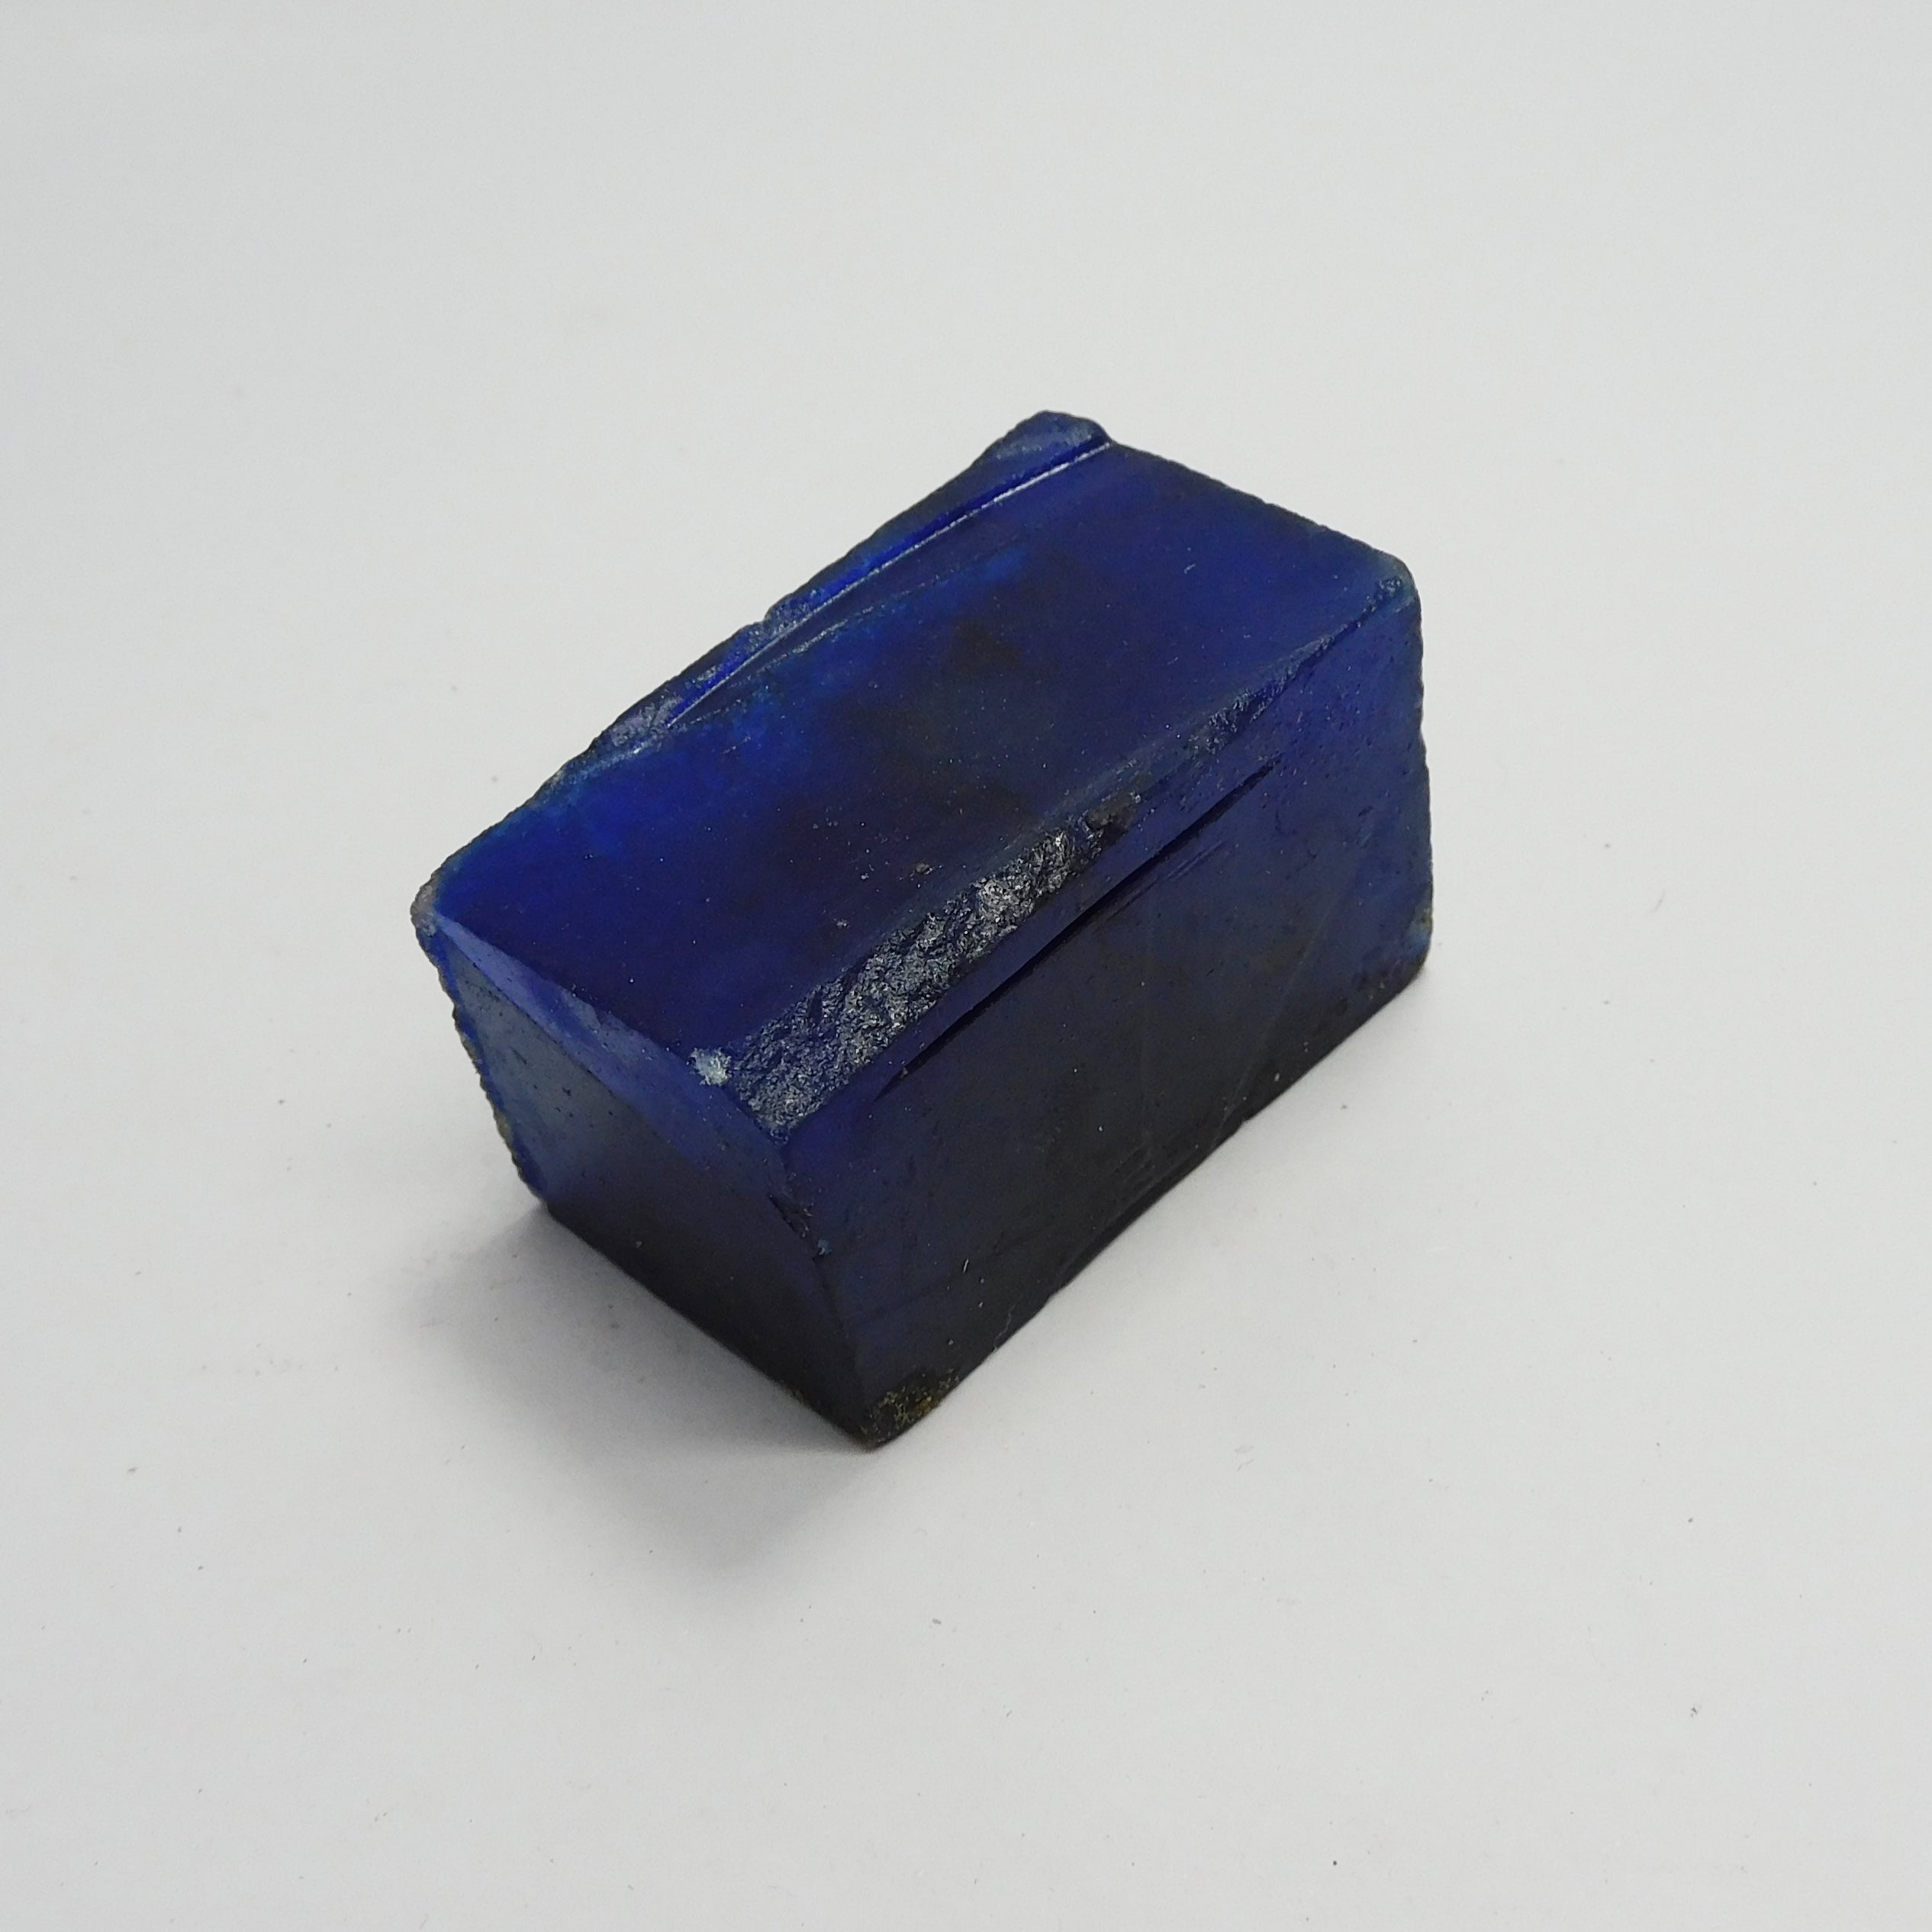 418.15 Carat Fancy Cut Rough Natural Tanzanite Blue CERTIFIED Uncut Raw Rough Loose Gemstone